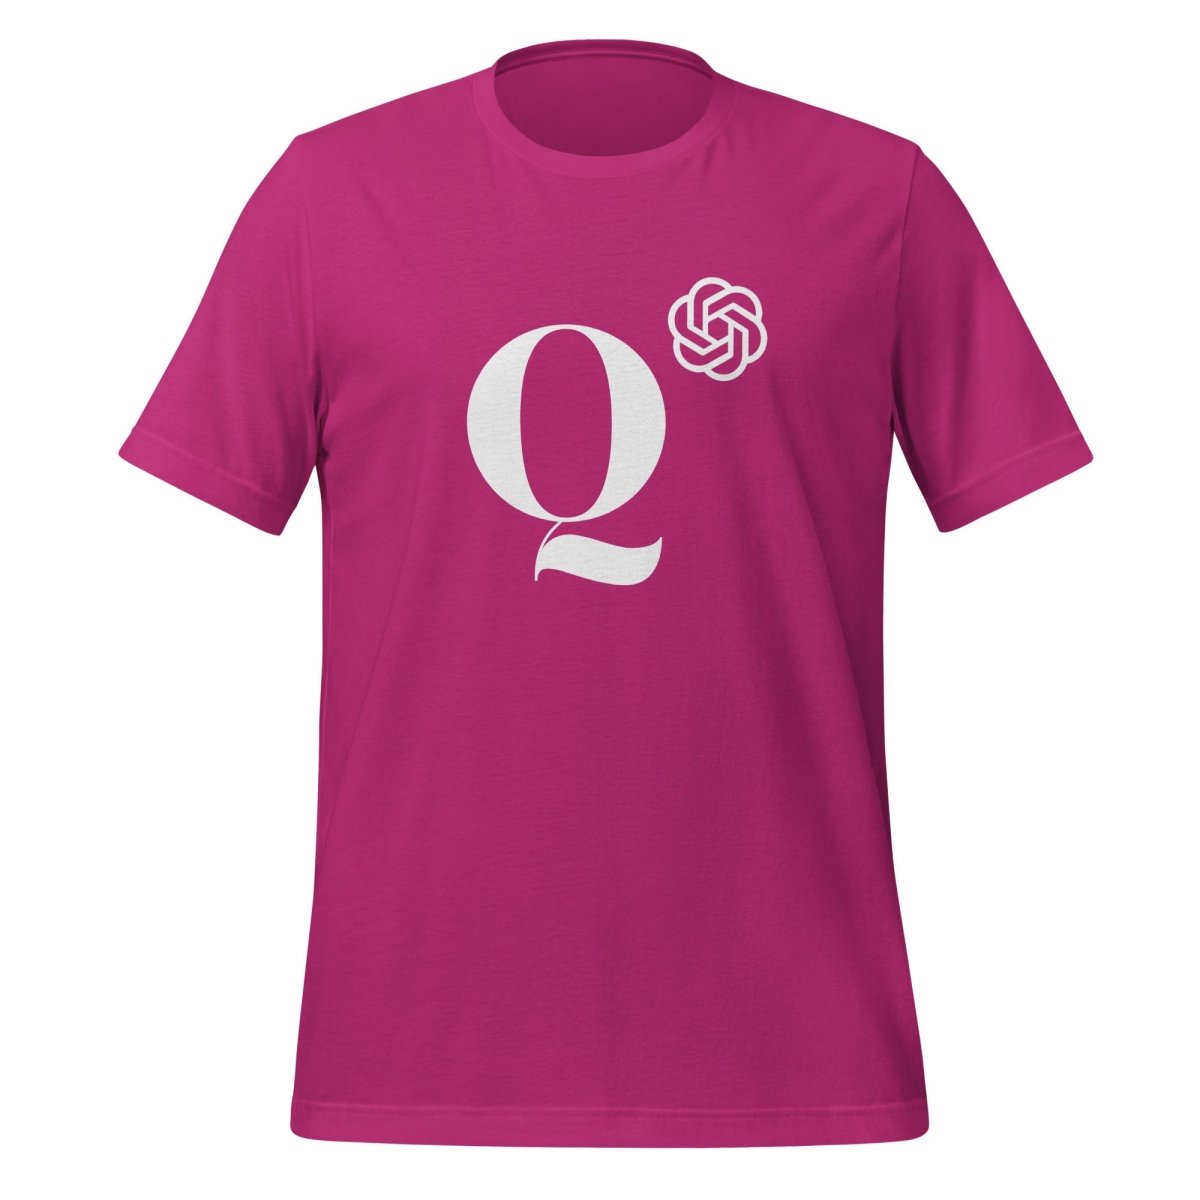 Q* (Q - Star) T - Shirt 5 (unisex) - Berry - AI Store